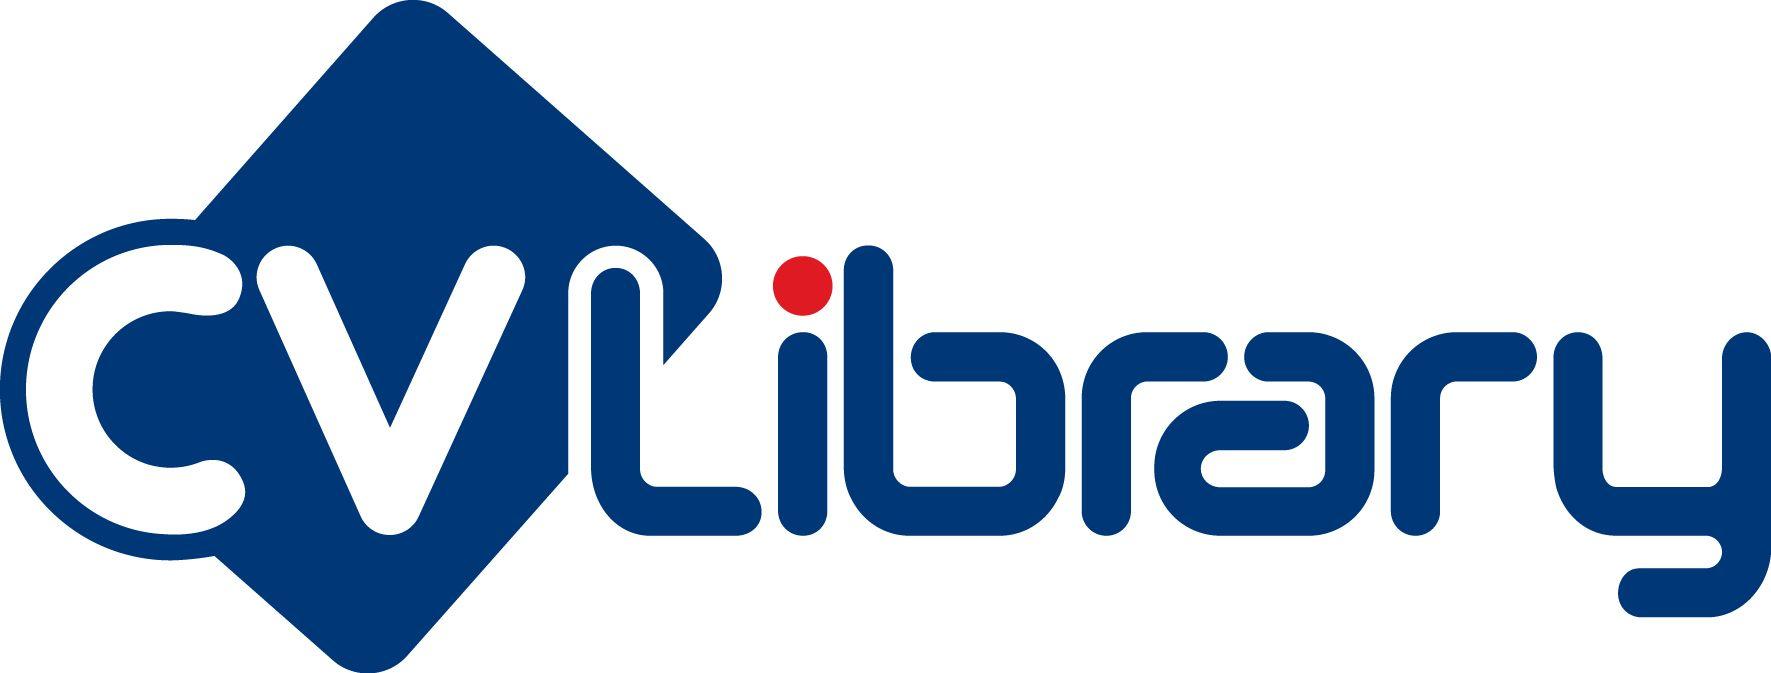 Libraray Logo - Job Search - Find 195,000 UK jobs on CV-Library